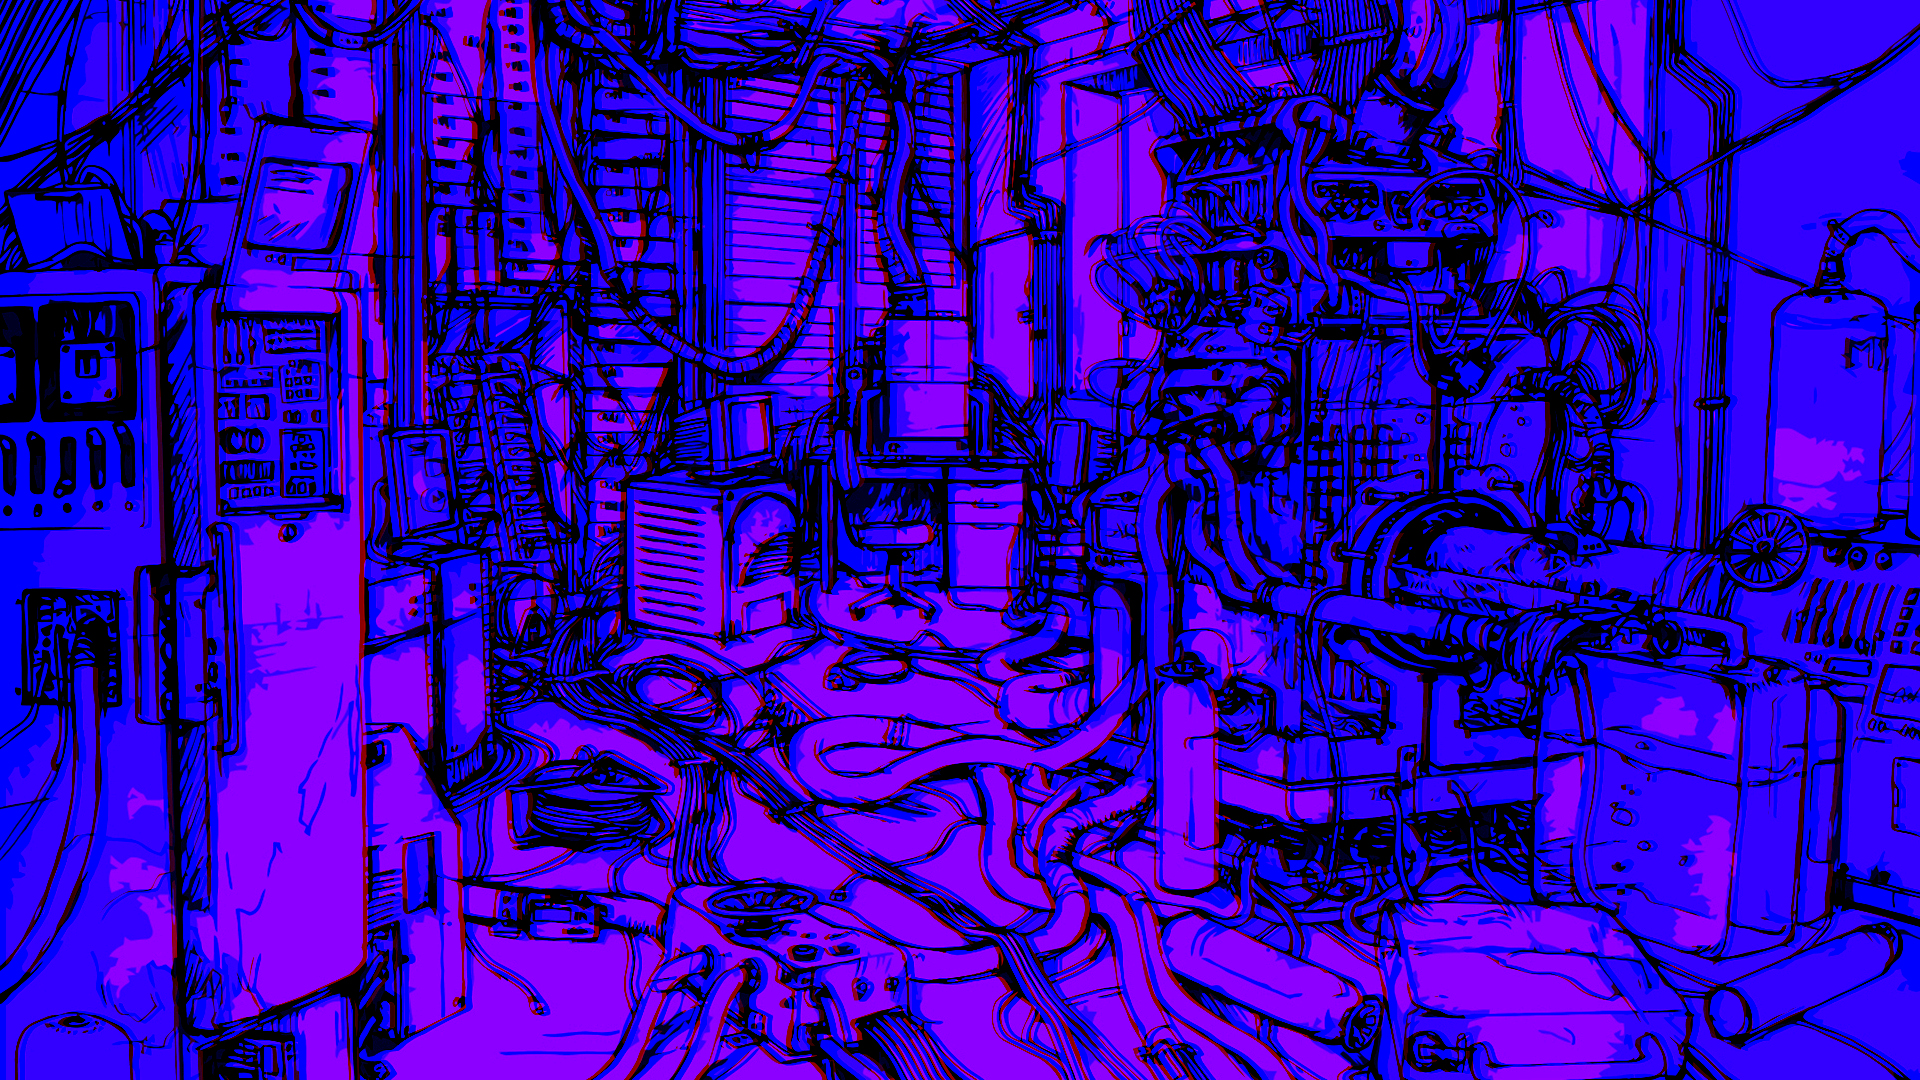 Serial Experiments Lain Cyberpunk Artwork 19x1080 Wallpaper Wallhaven Cc